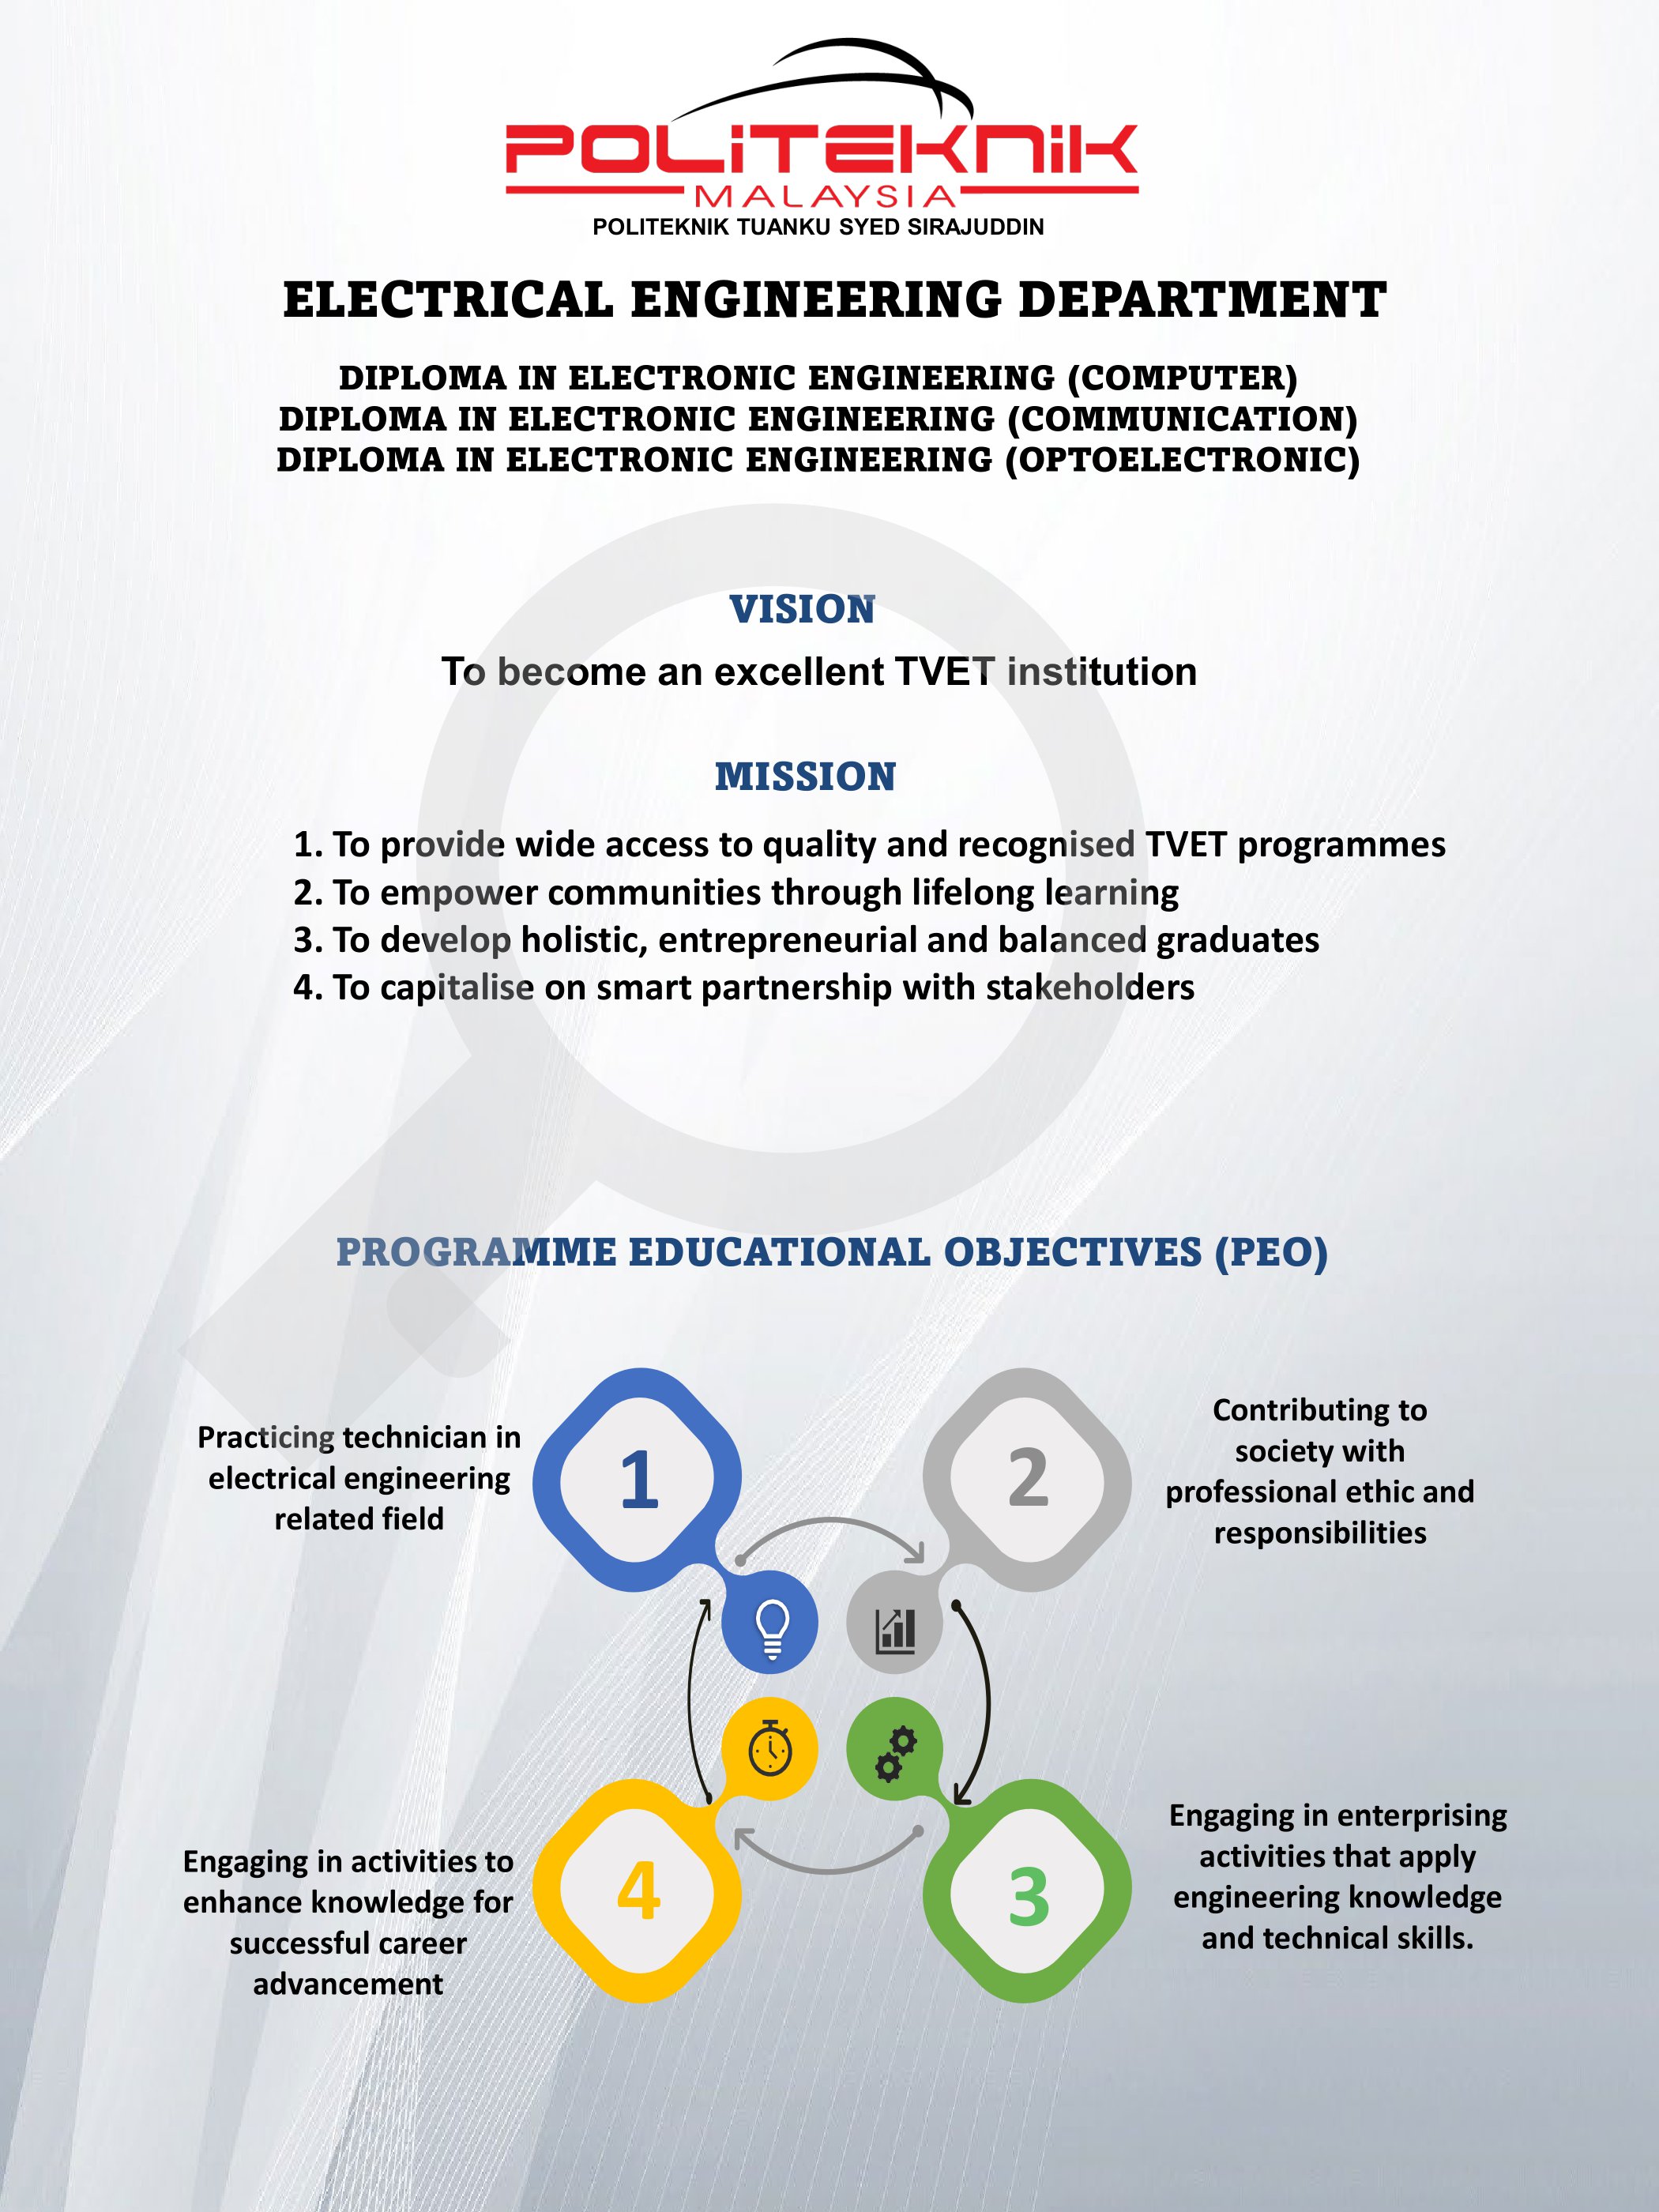 JKE - Programme Educational Objectives (PEO)